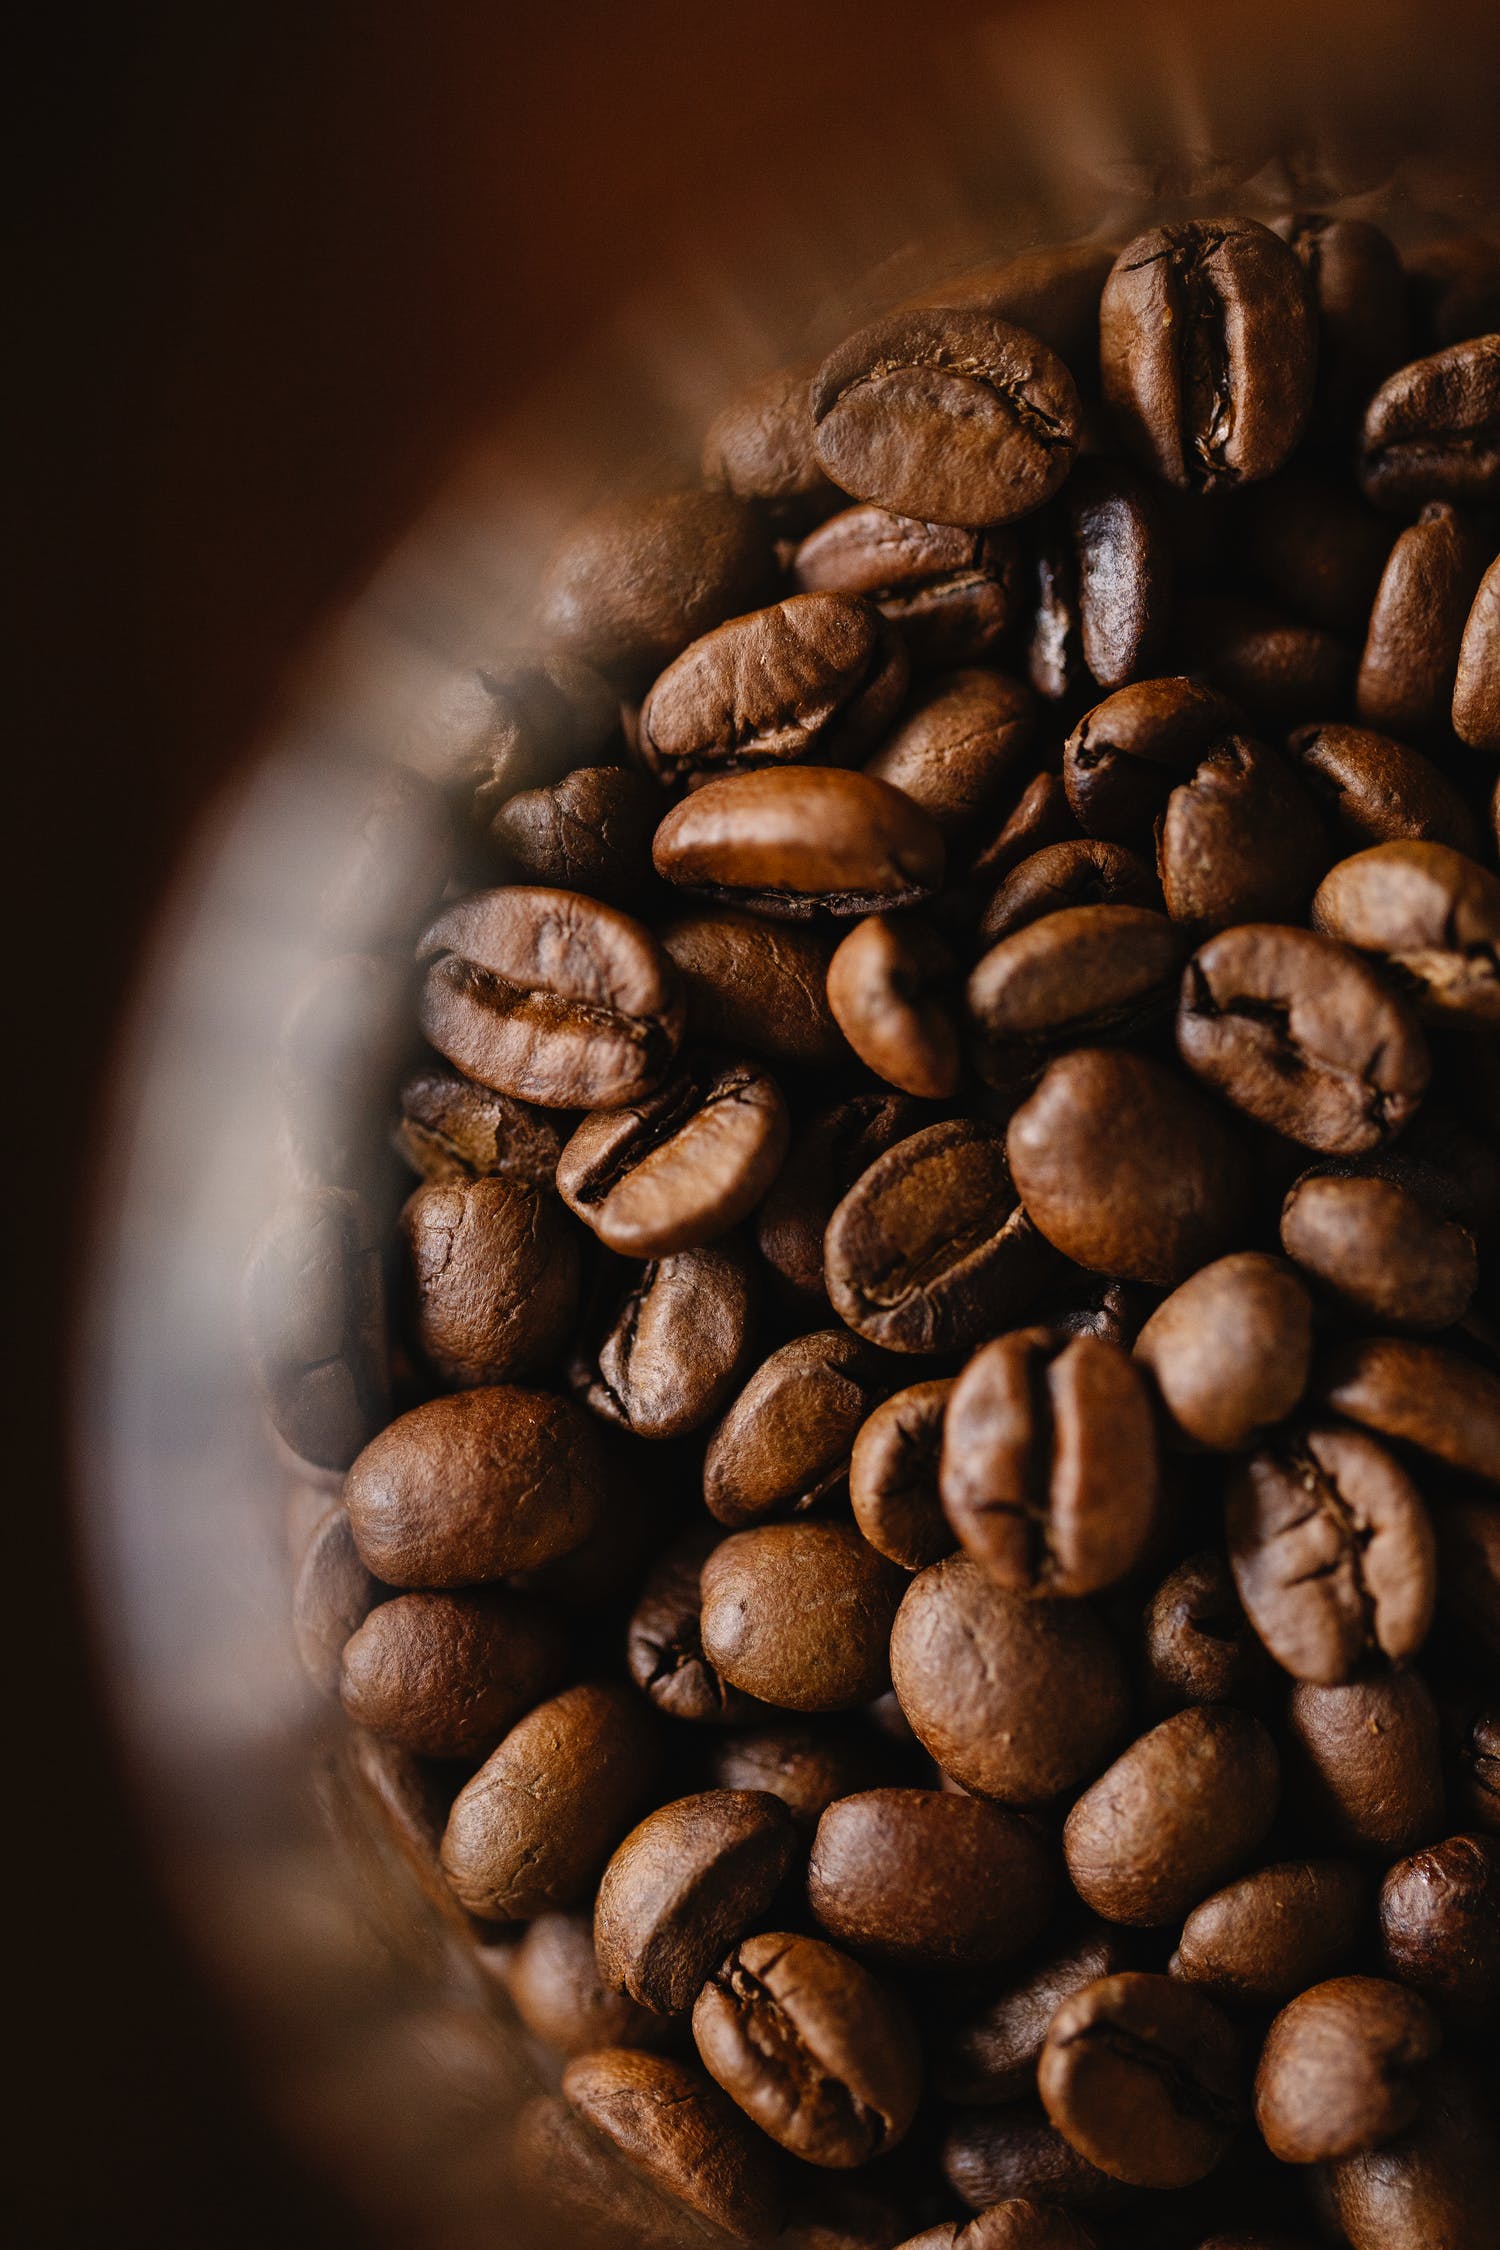 Six Storage Tips to Keep Coffee Beans Fresh